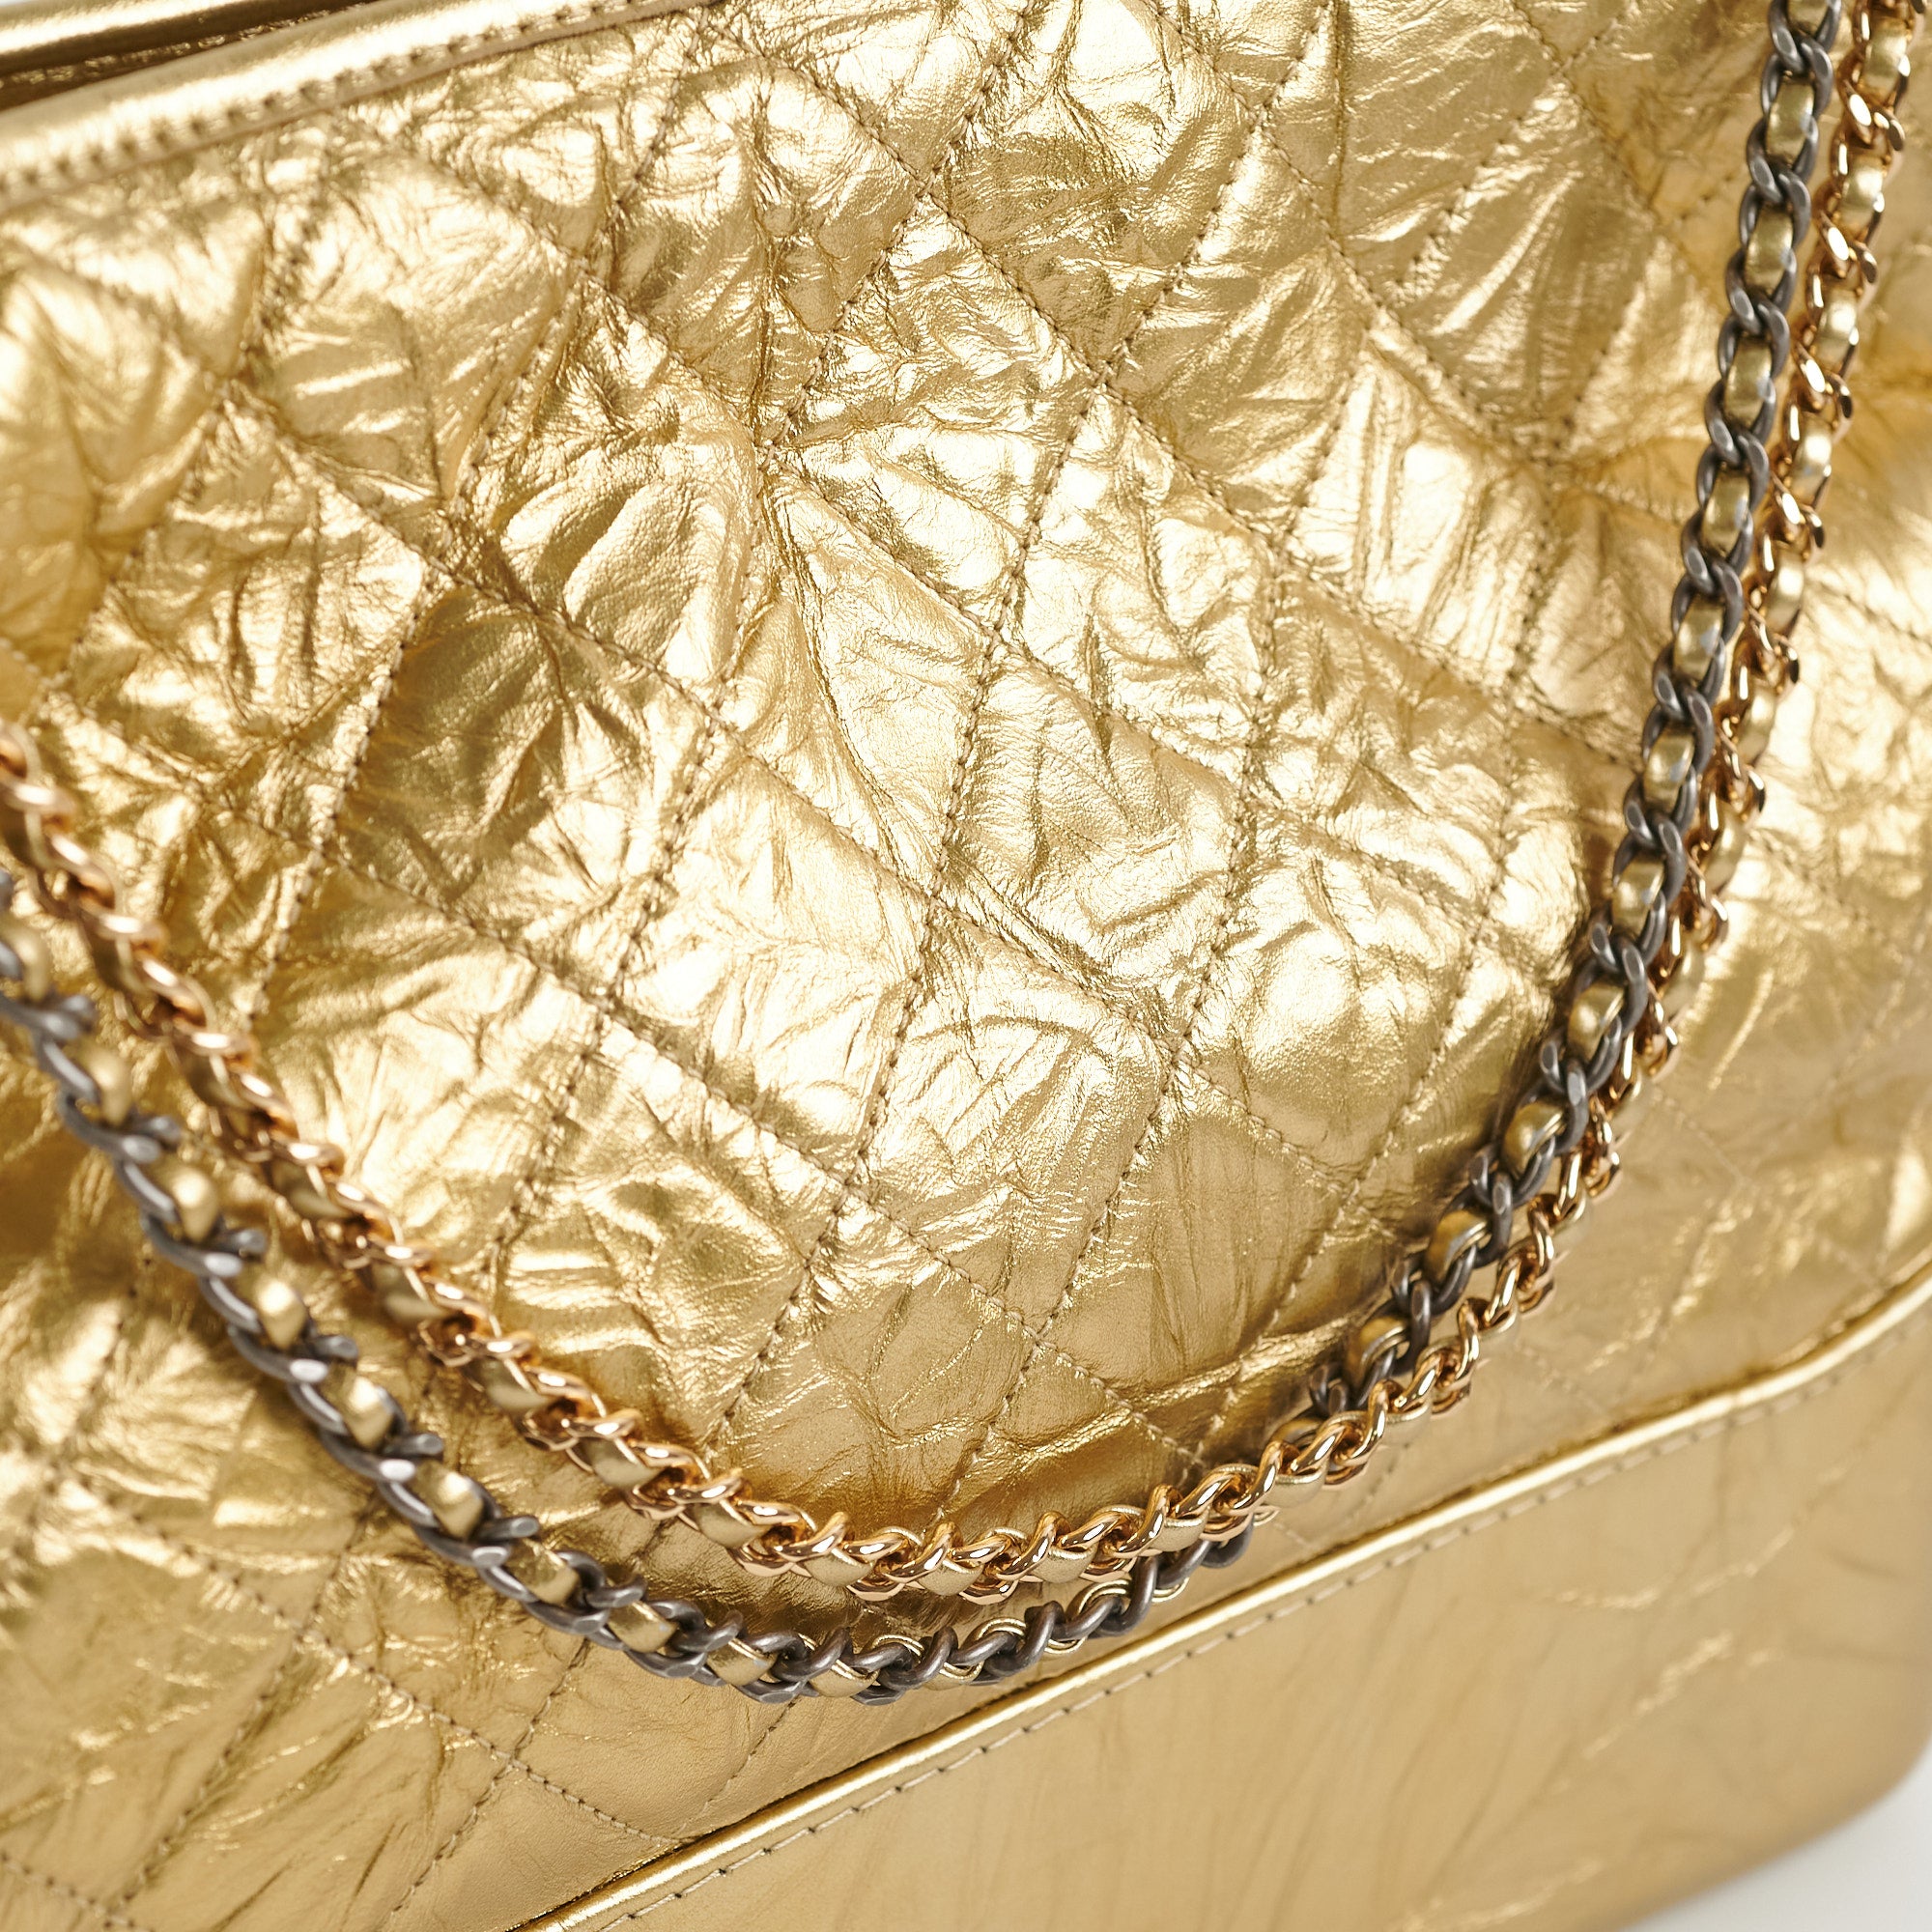 Chanel Gabrielle Hobo Large Gold - THE PURSE AFFAIR